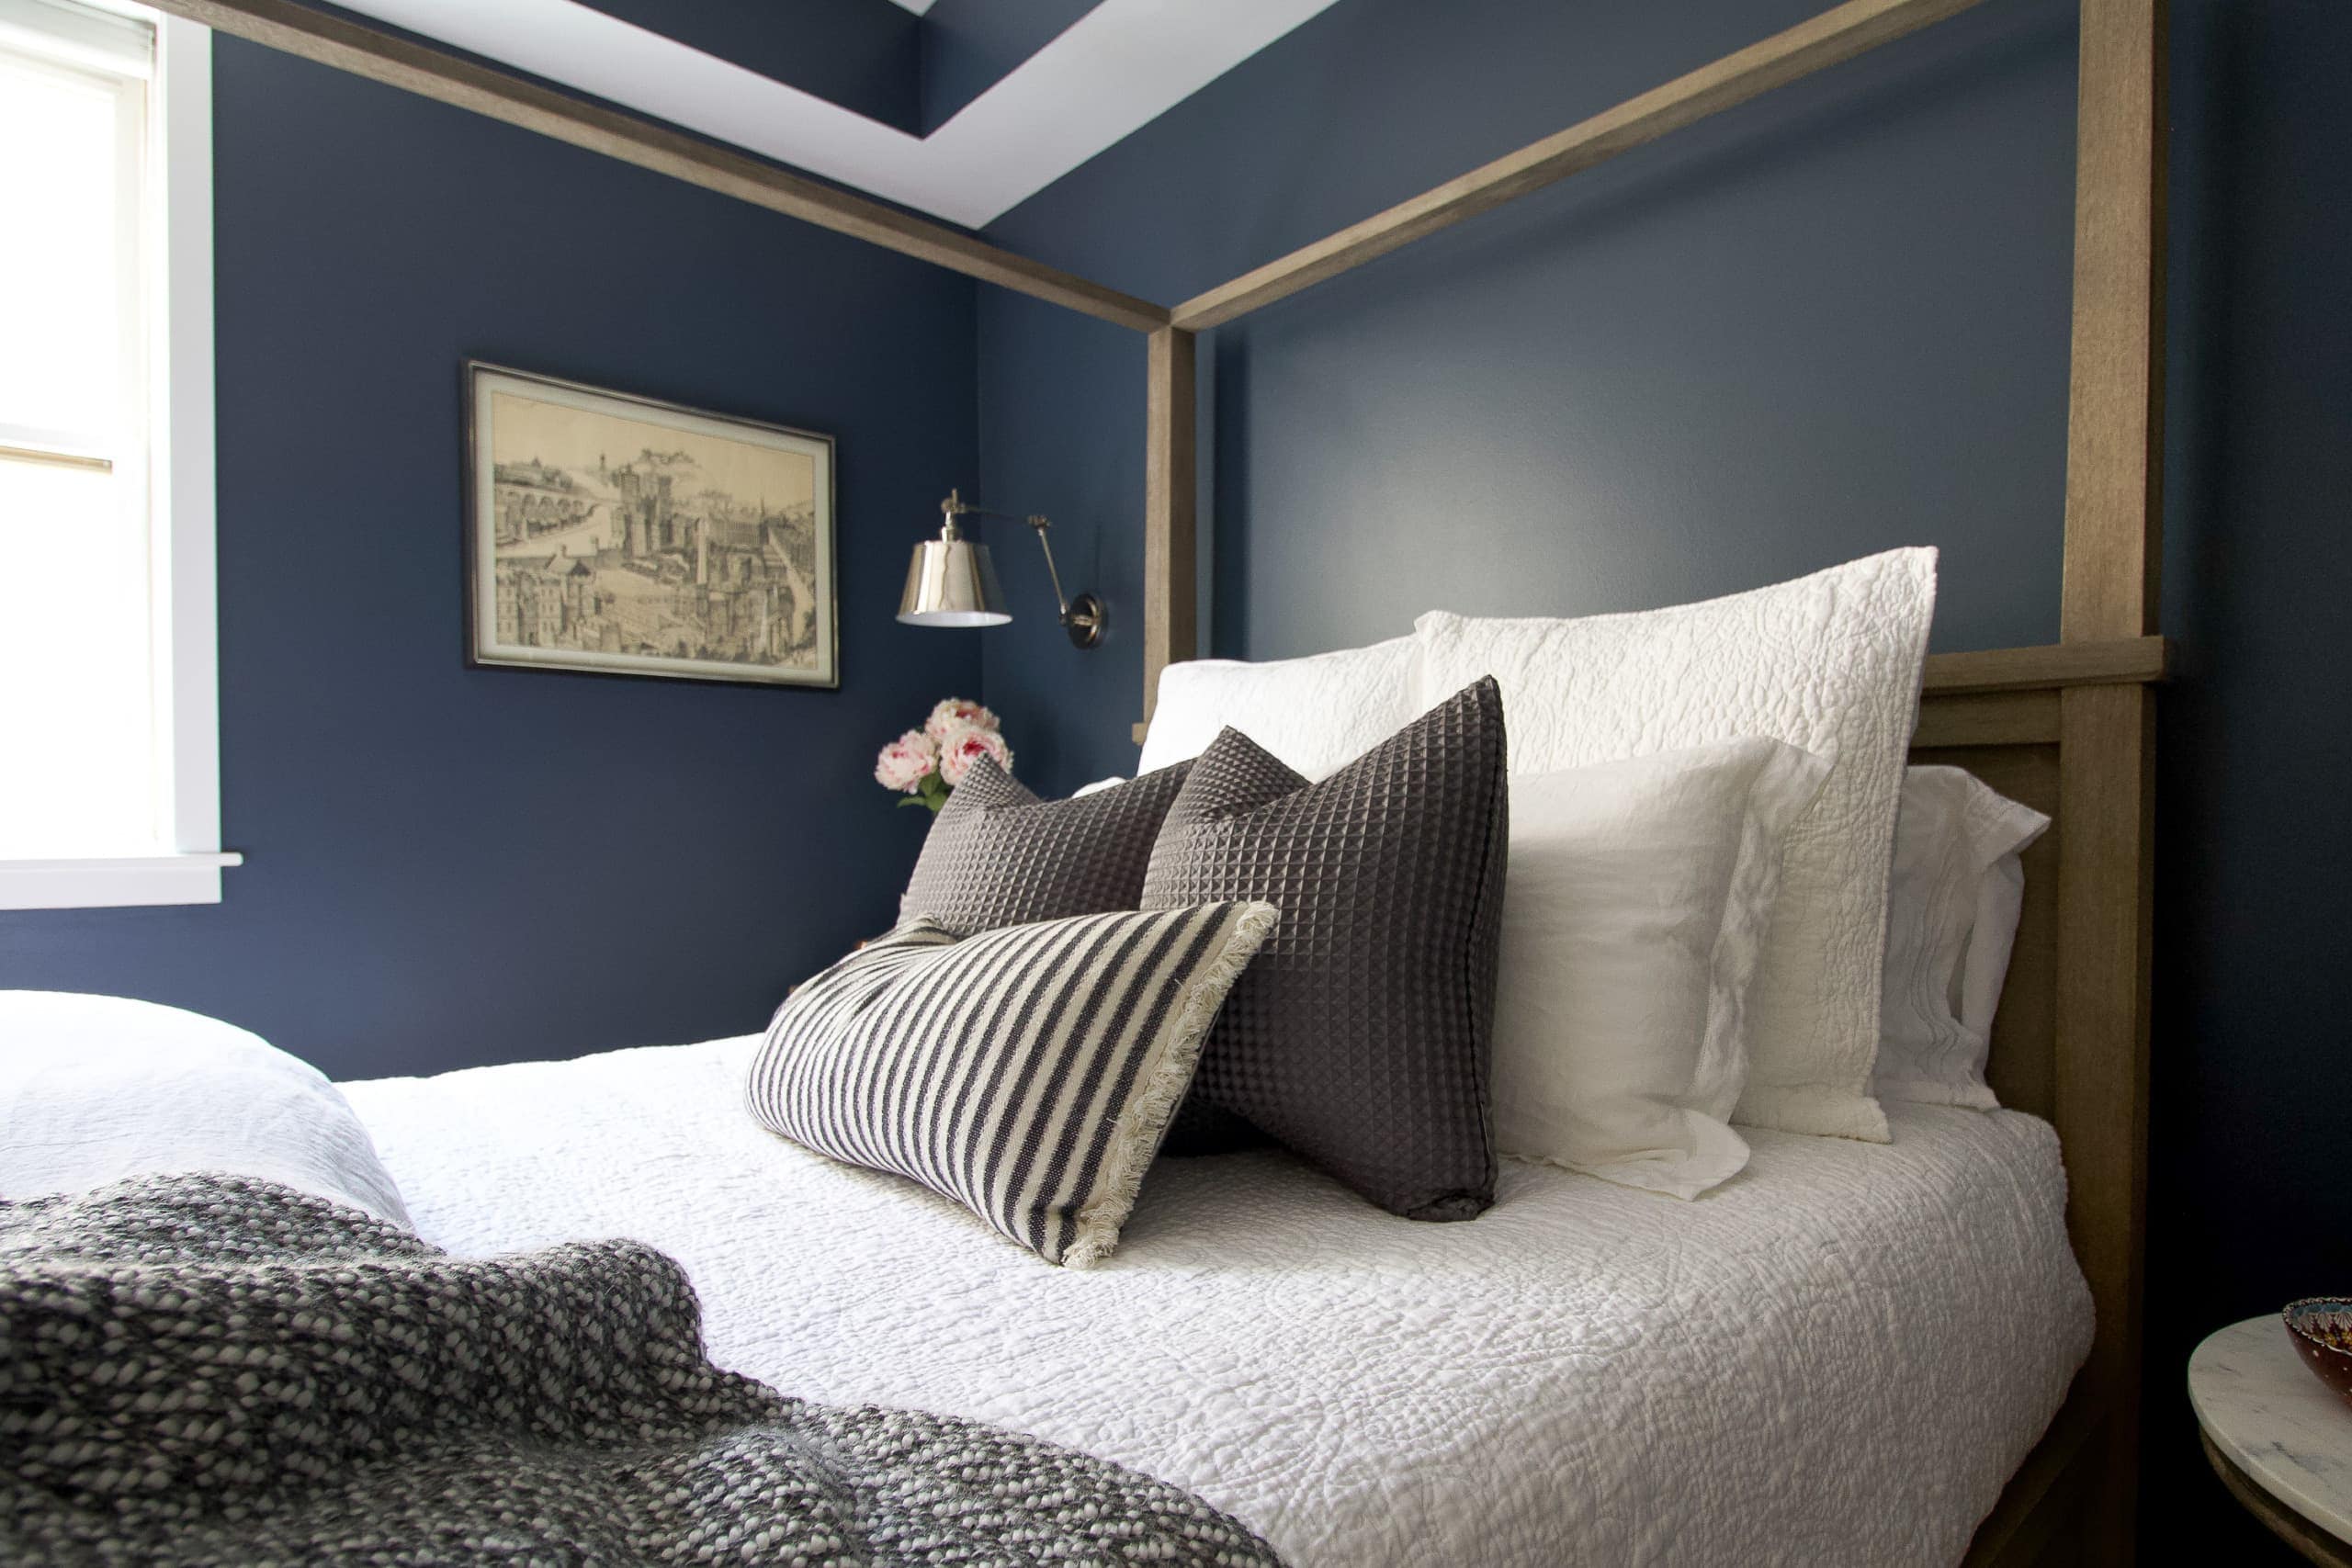 Cozy bedding in a guest room retreat